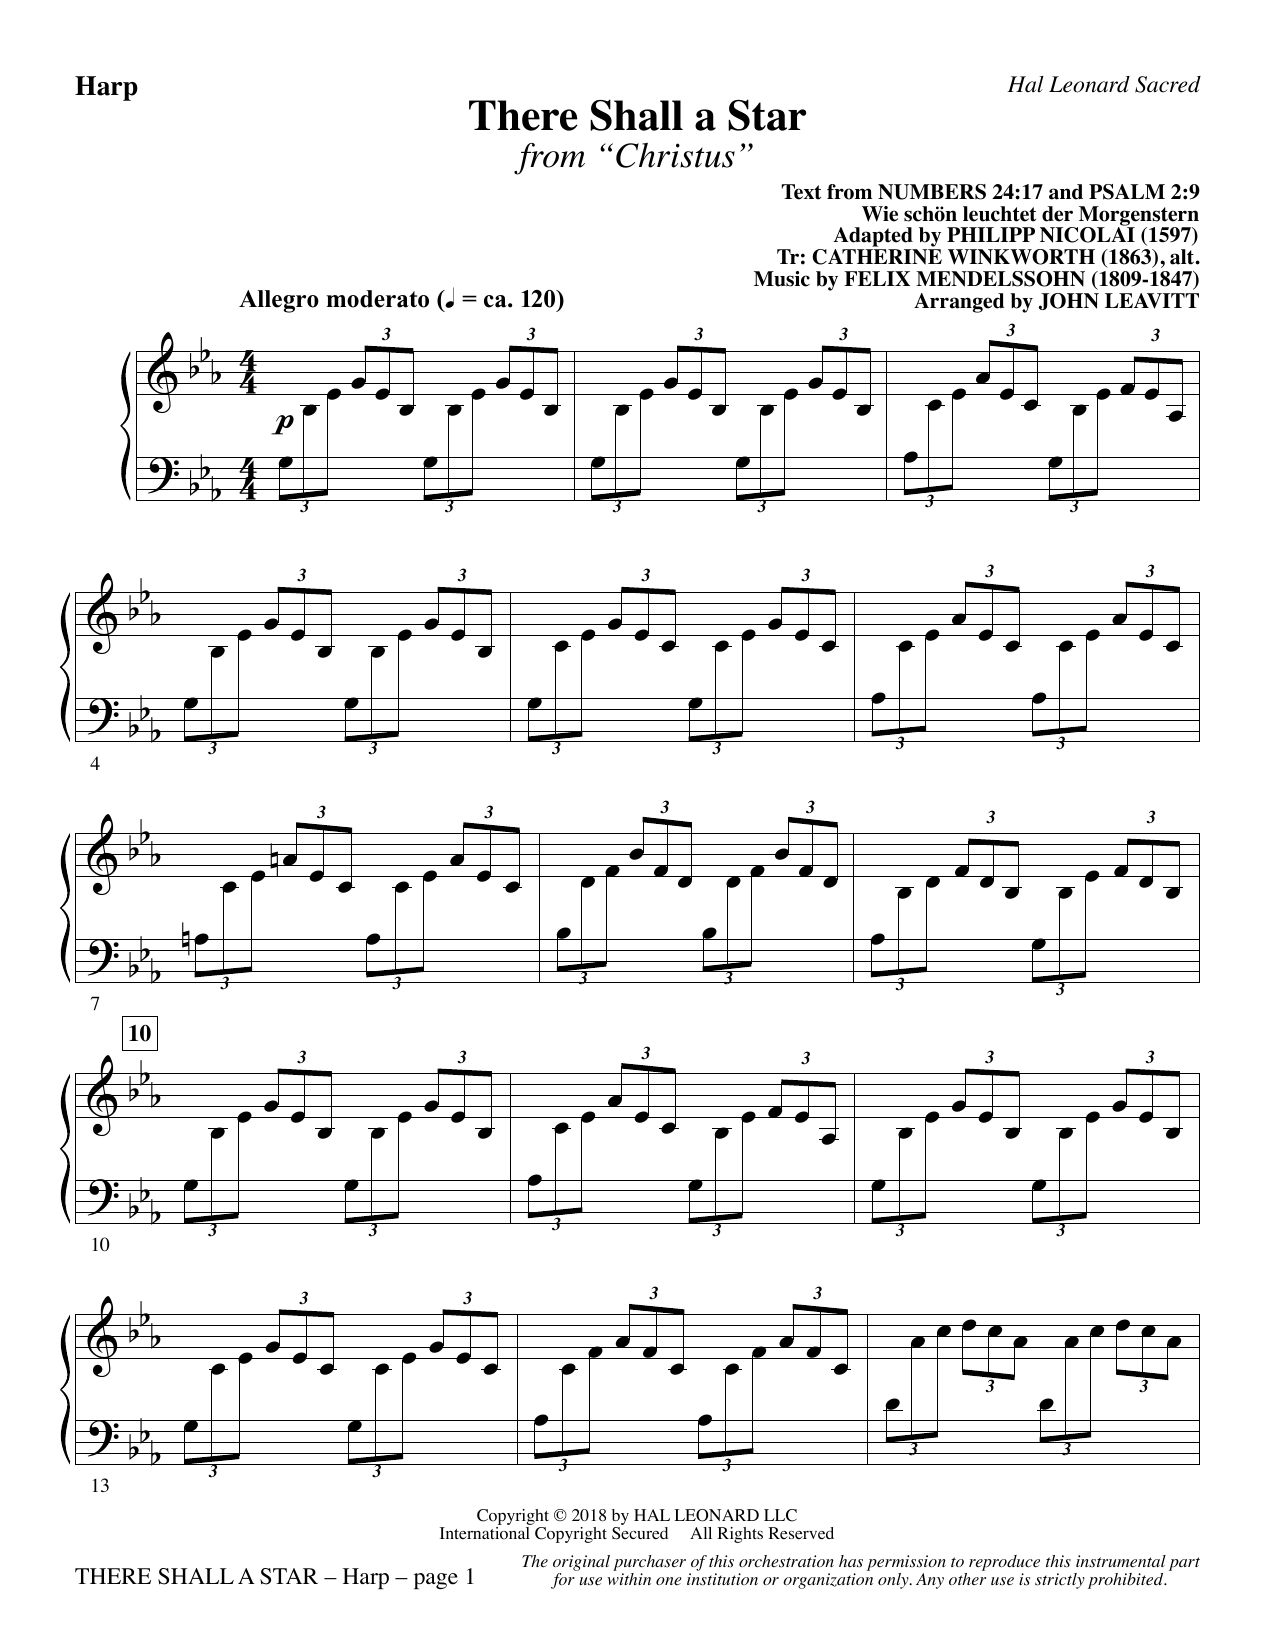 There Shall a Star (arr. John Leavitt) - Harp sheet music